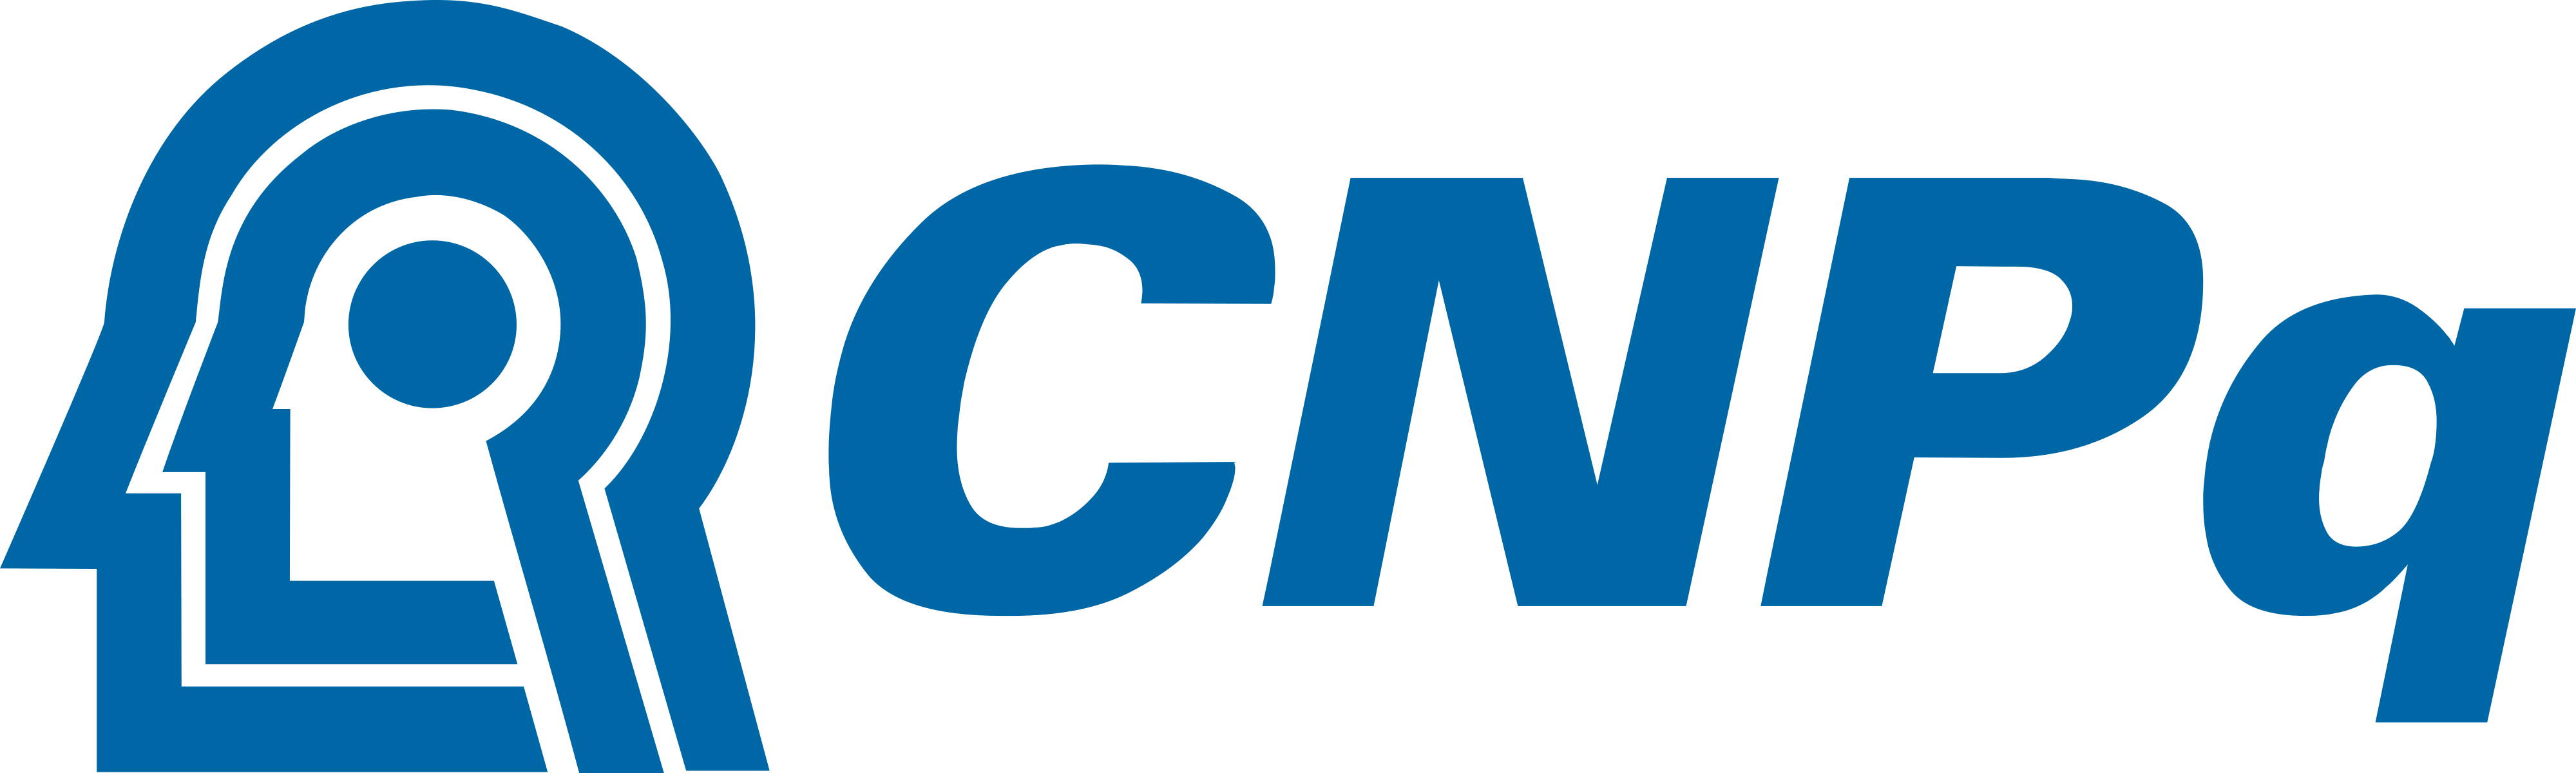 cnpq-logo